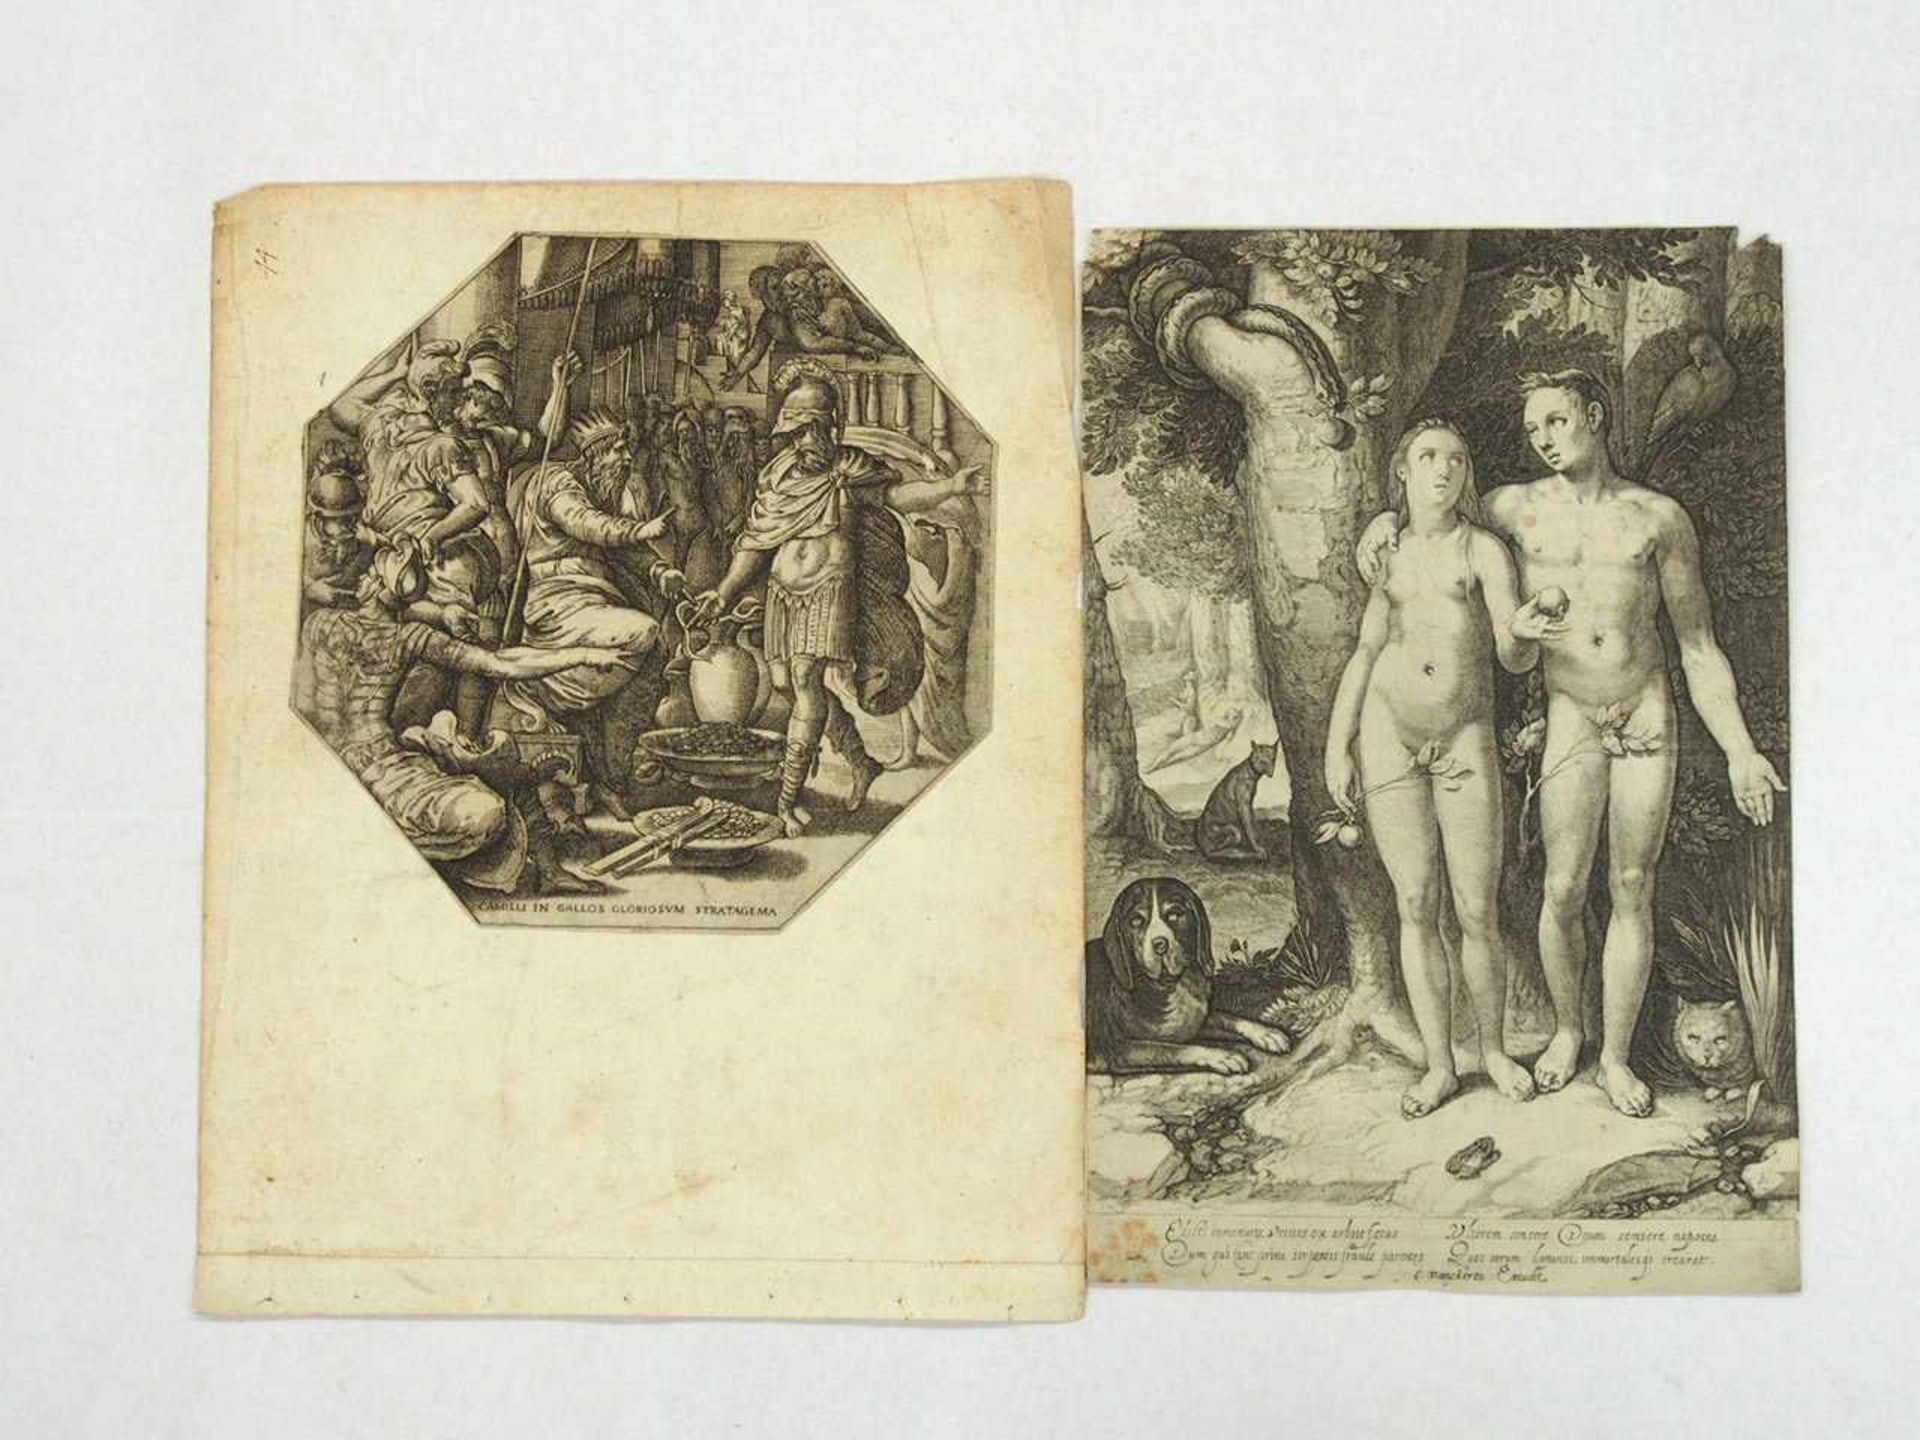 REVERDY, Georges1529-1565Camille in Gallos gloriosum stratagemaRadierung, 21,7 x 21,7 cm (